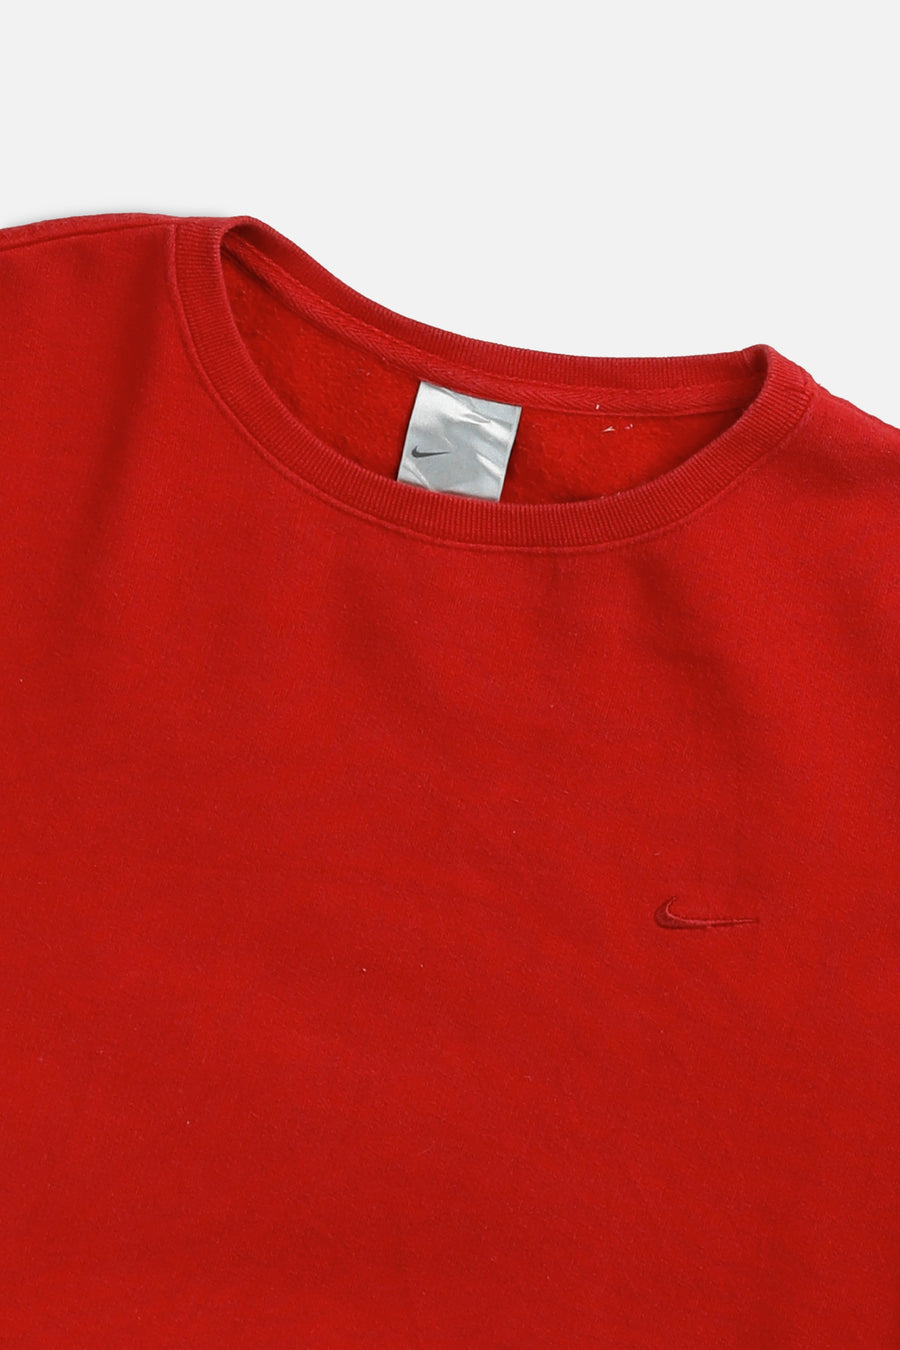 Vintage Nike Sweatshirt - Women's S